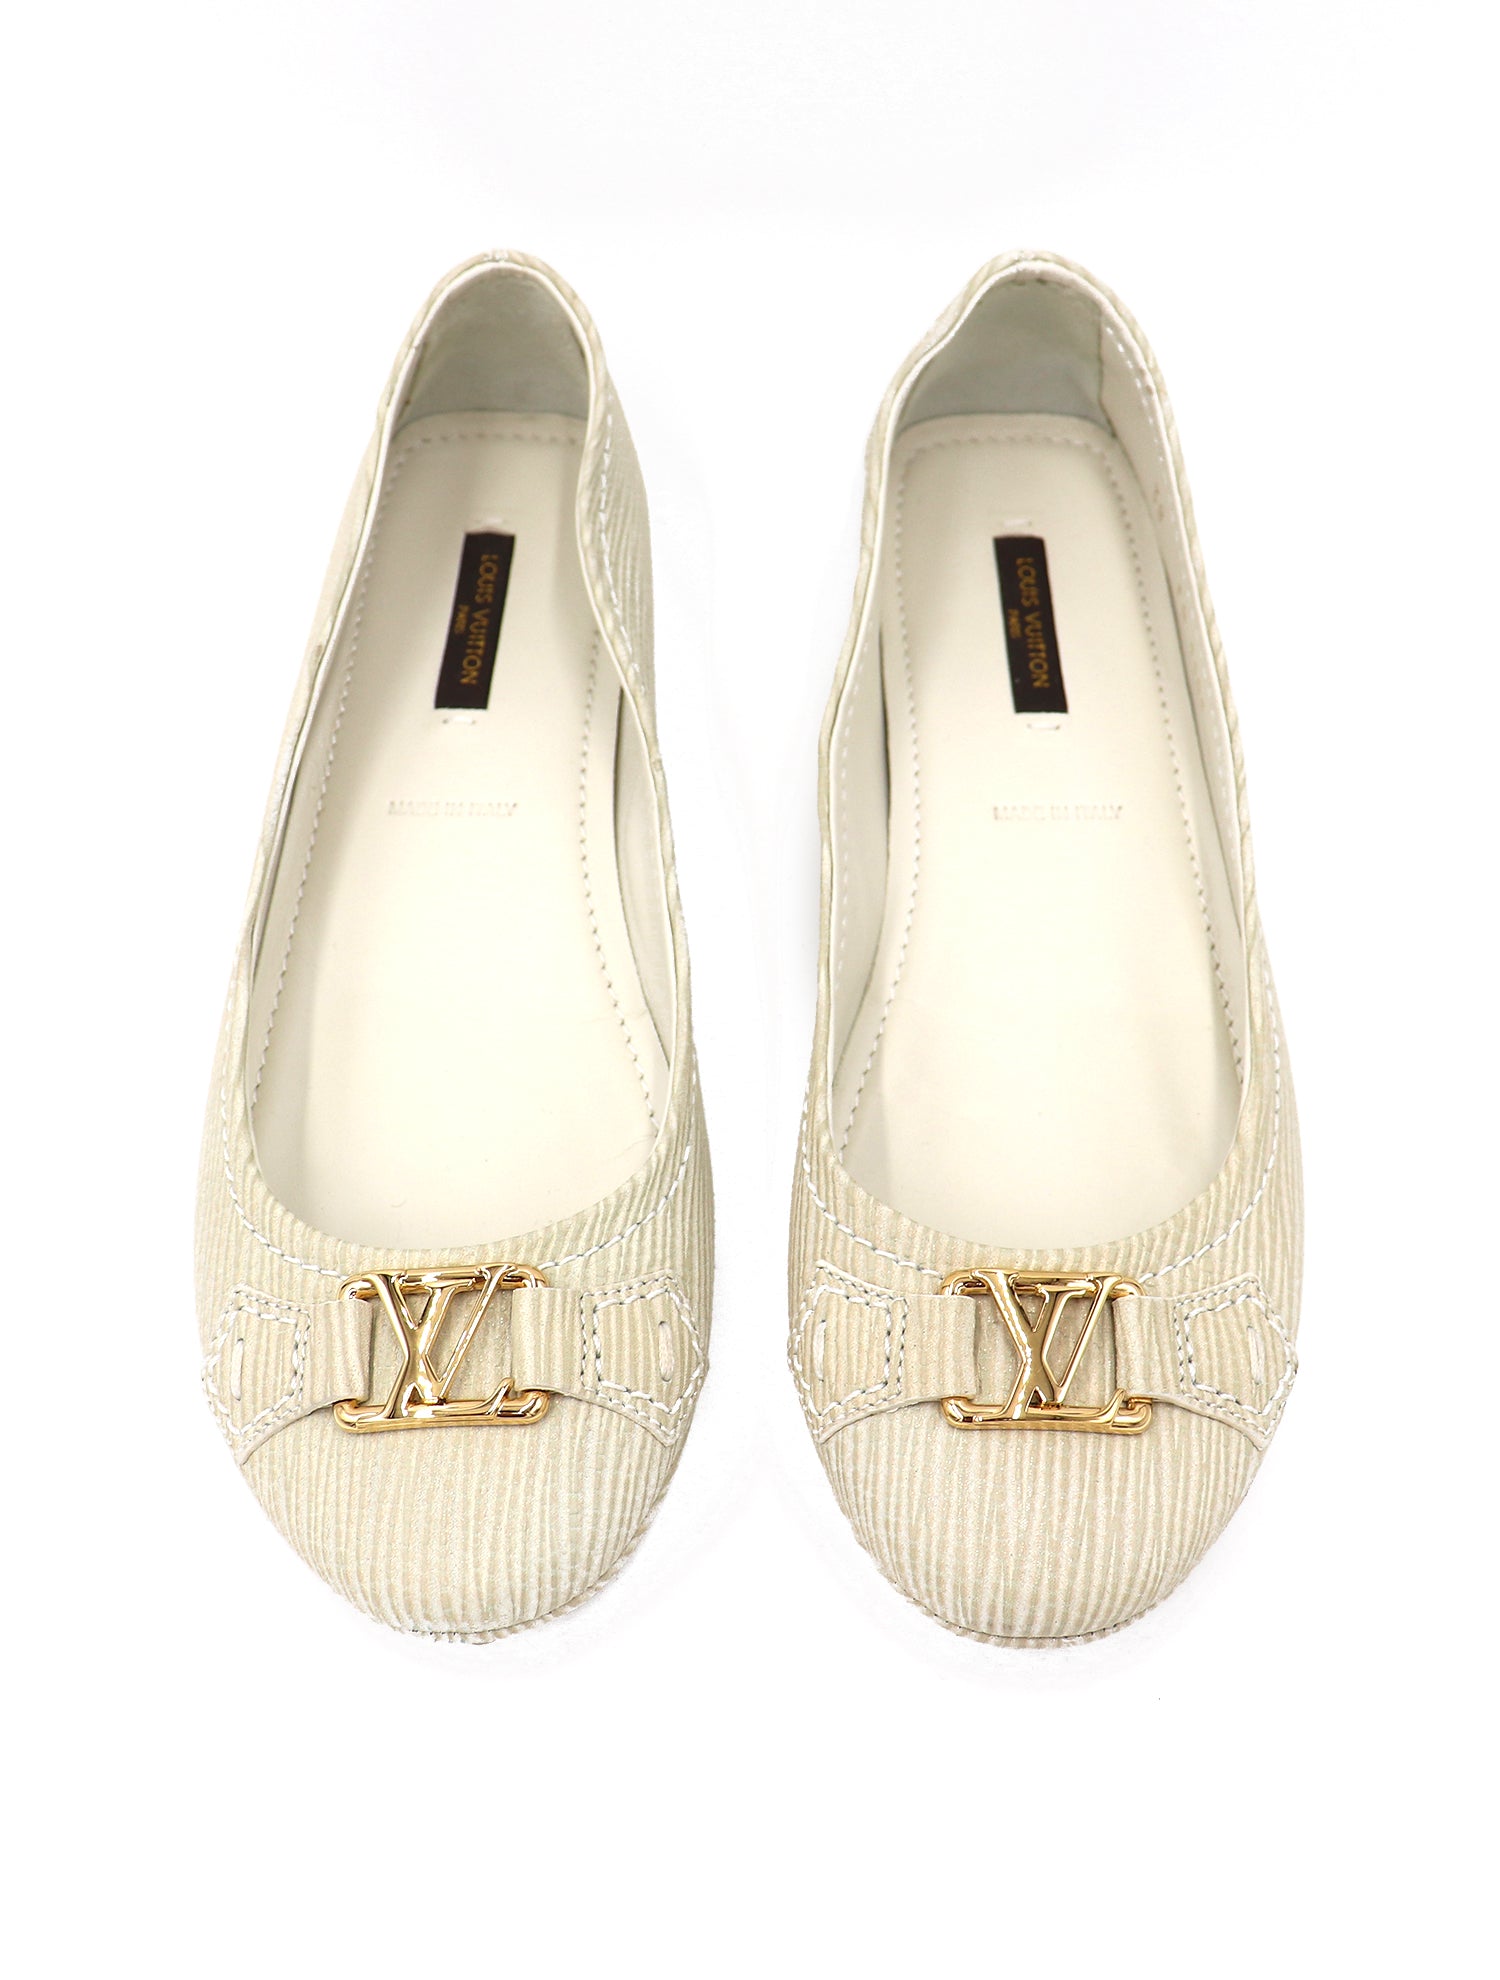 Louis Vuitton White Vernis Leather Oxford Ballerina Flats